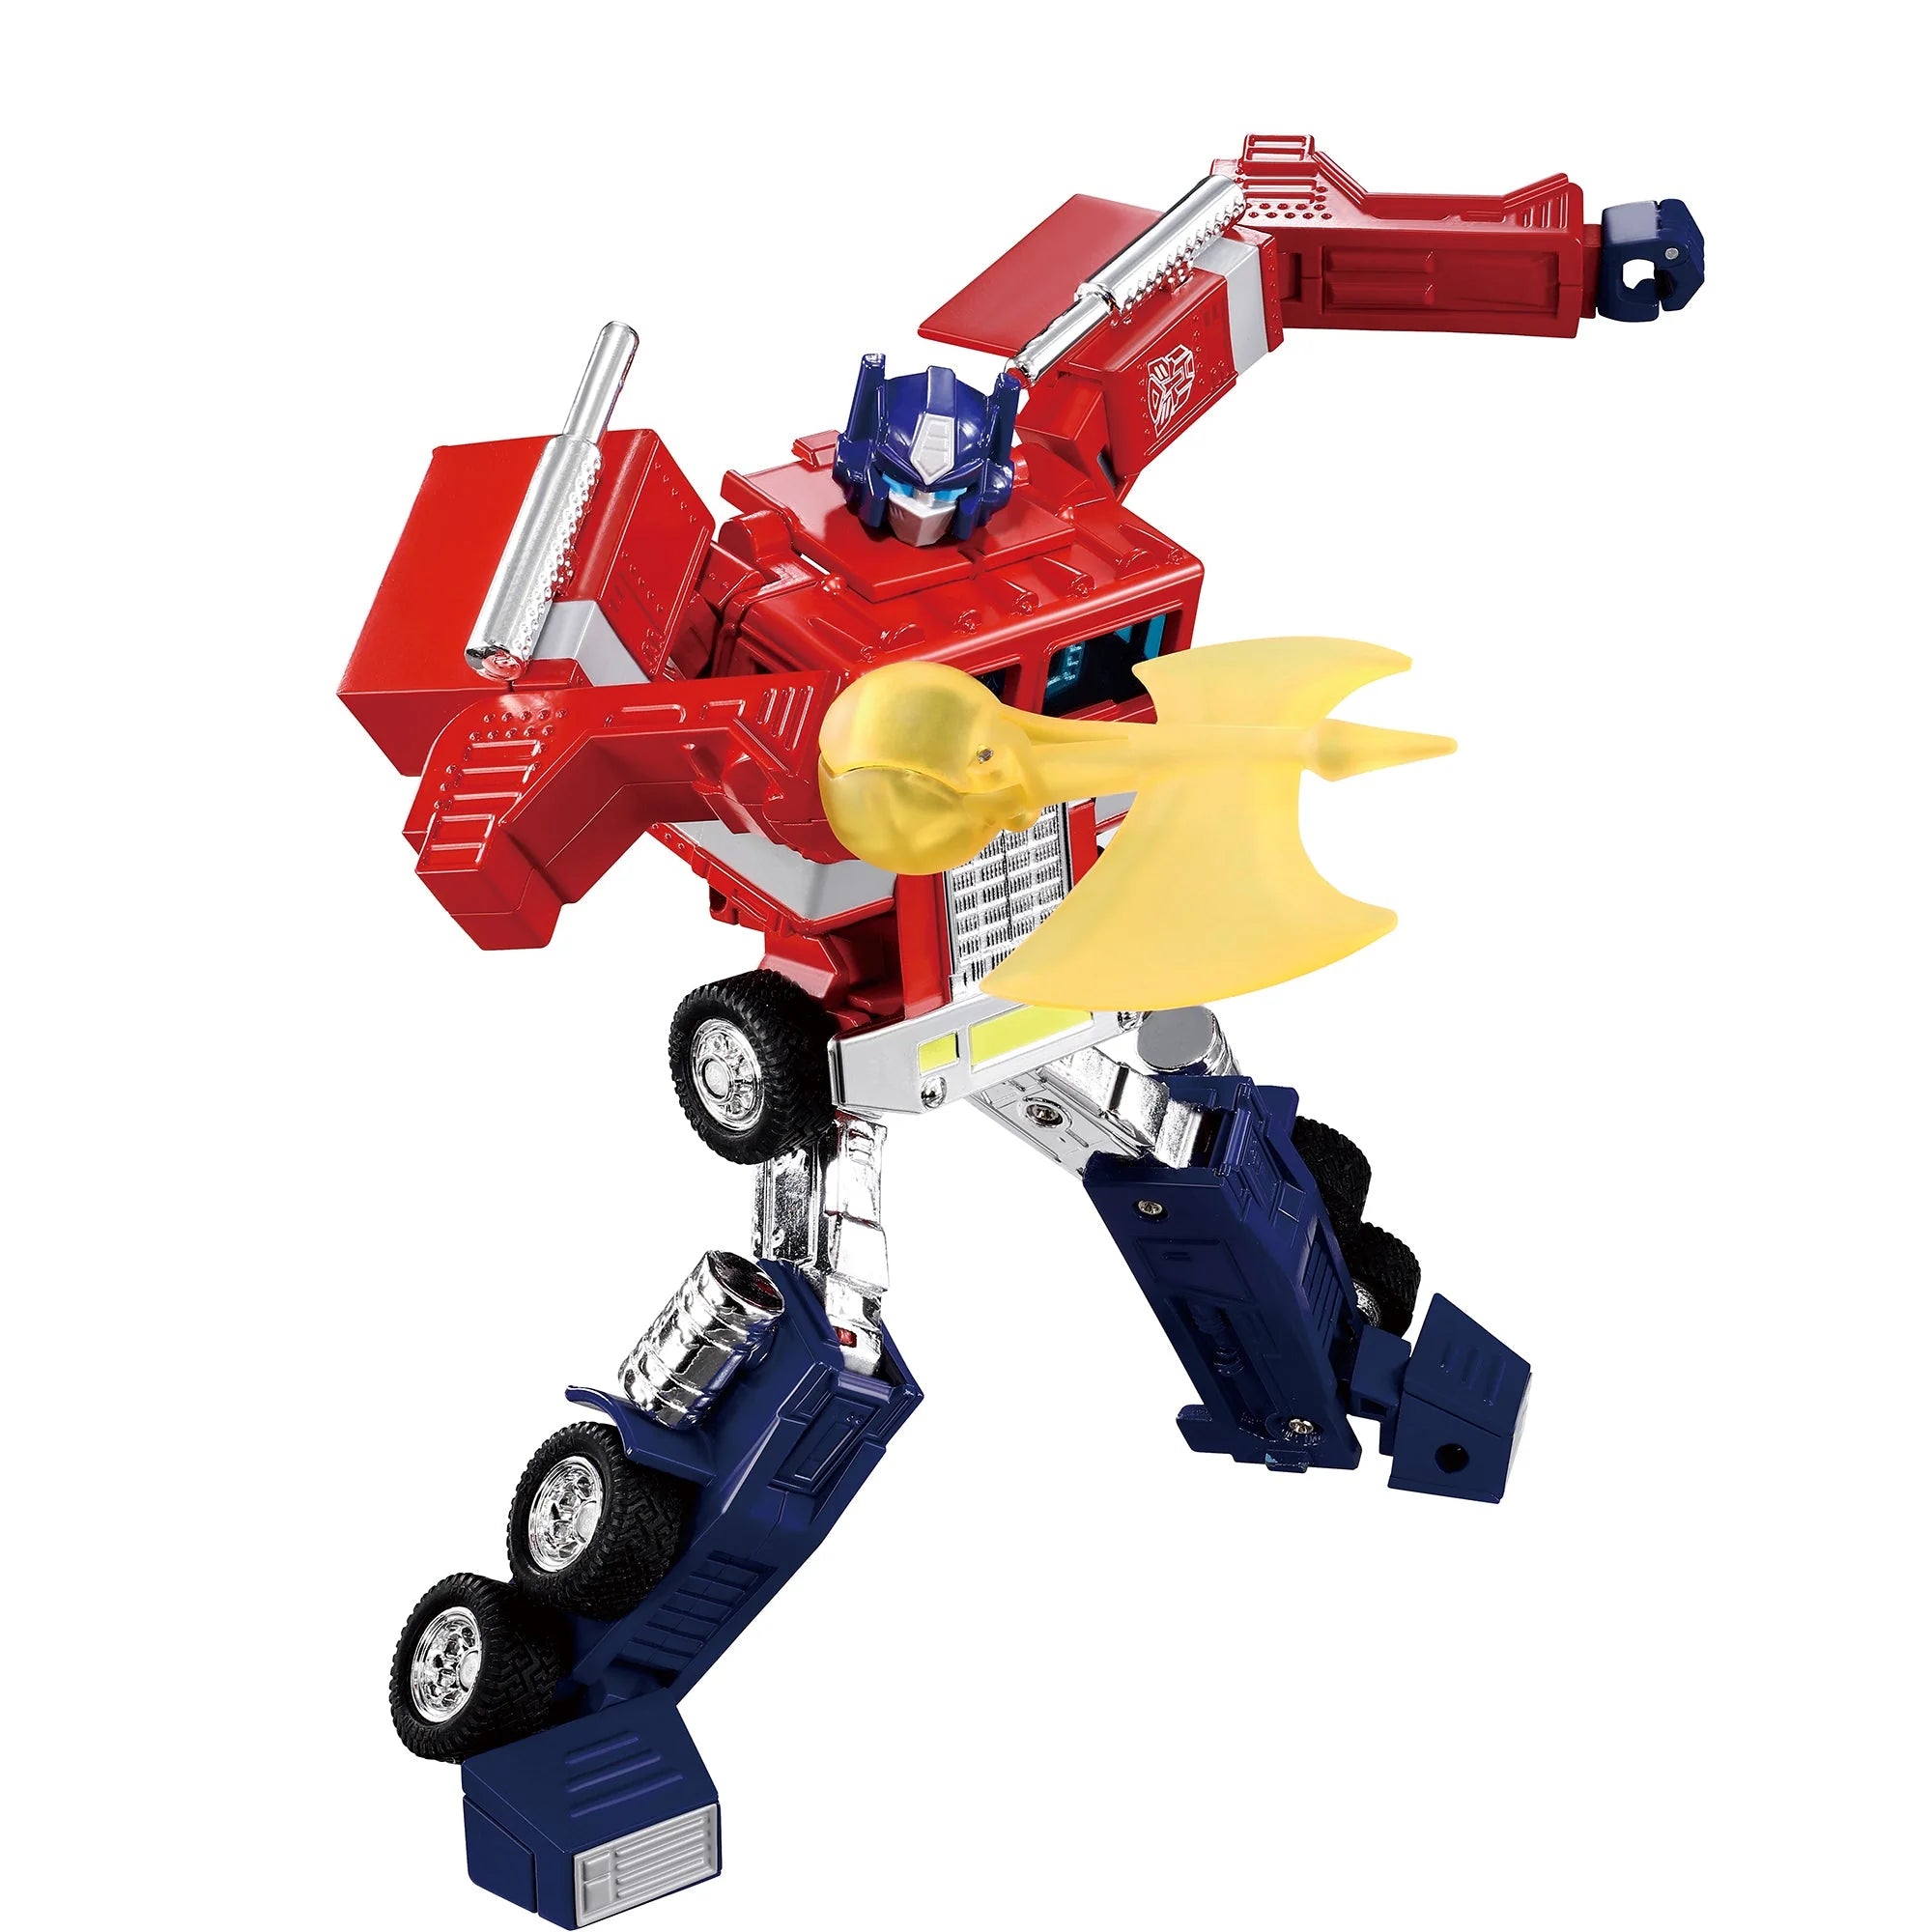 TakaraTomy - Transformers - Missing Link C-02 - Optimus Prime (Convoy) (Anime Ed.) - Marvelous Toys